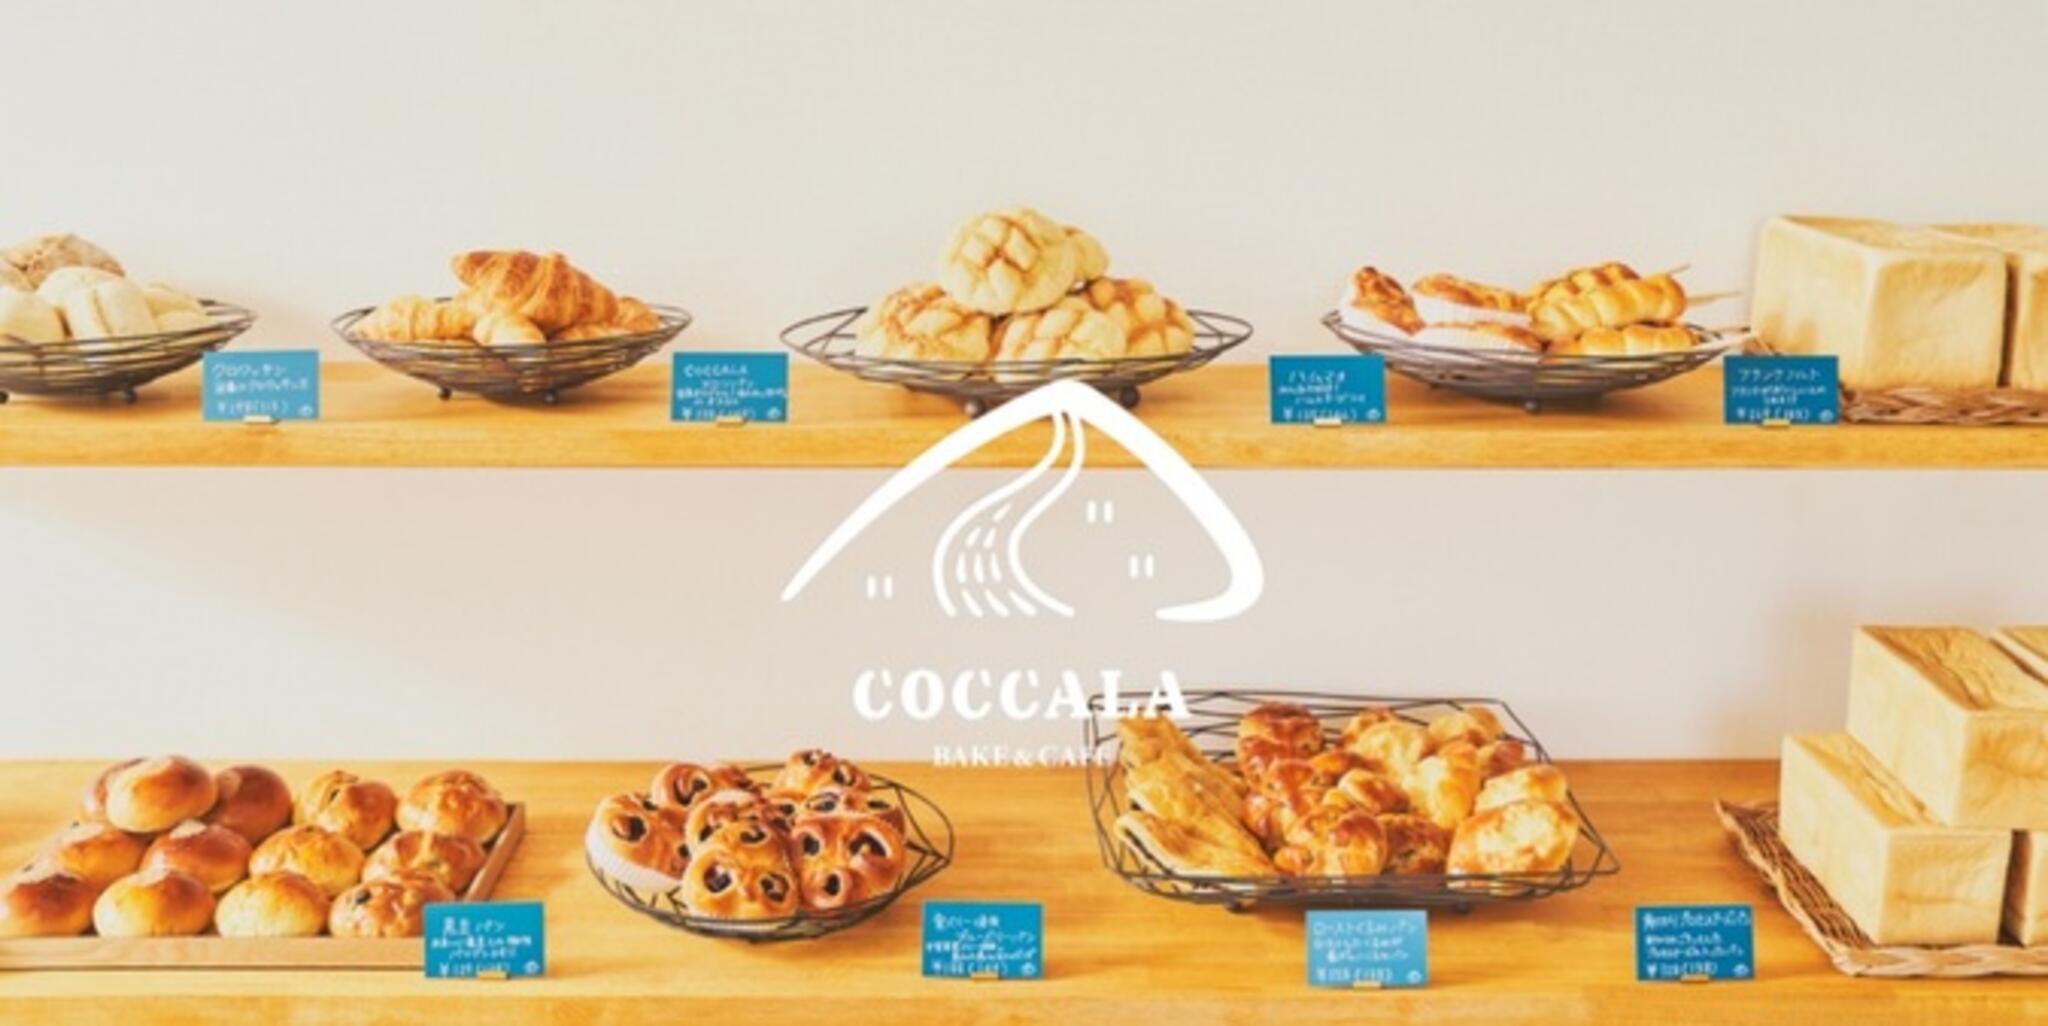 COCCALA bake＆cafeの代表写真6